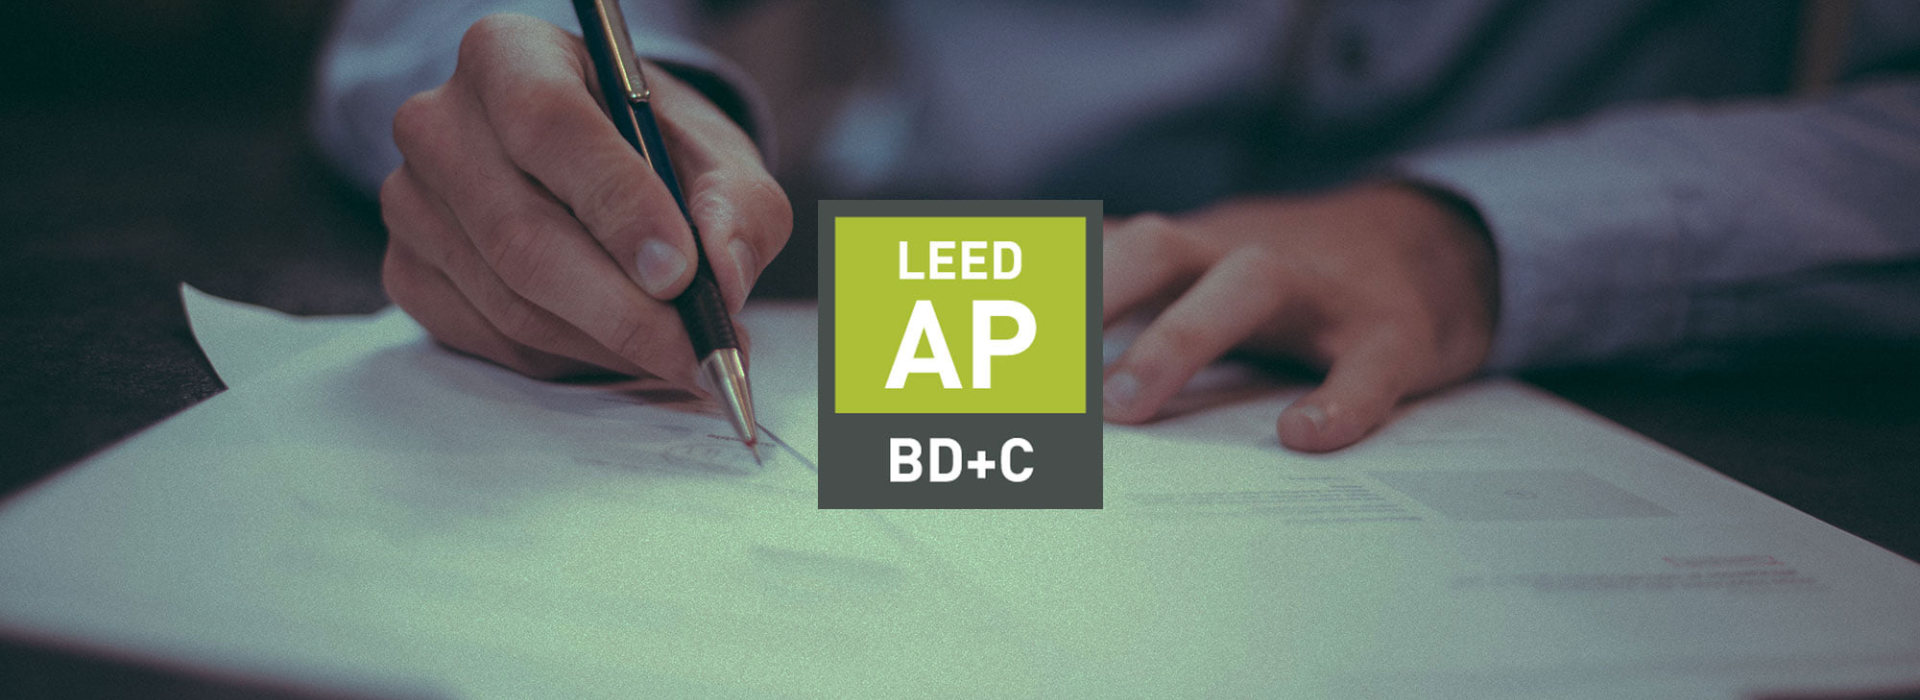 LEED AP BD+C Exam Prep